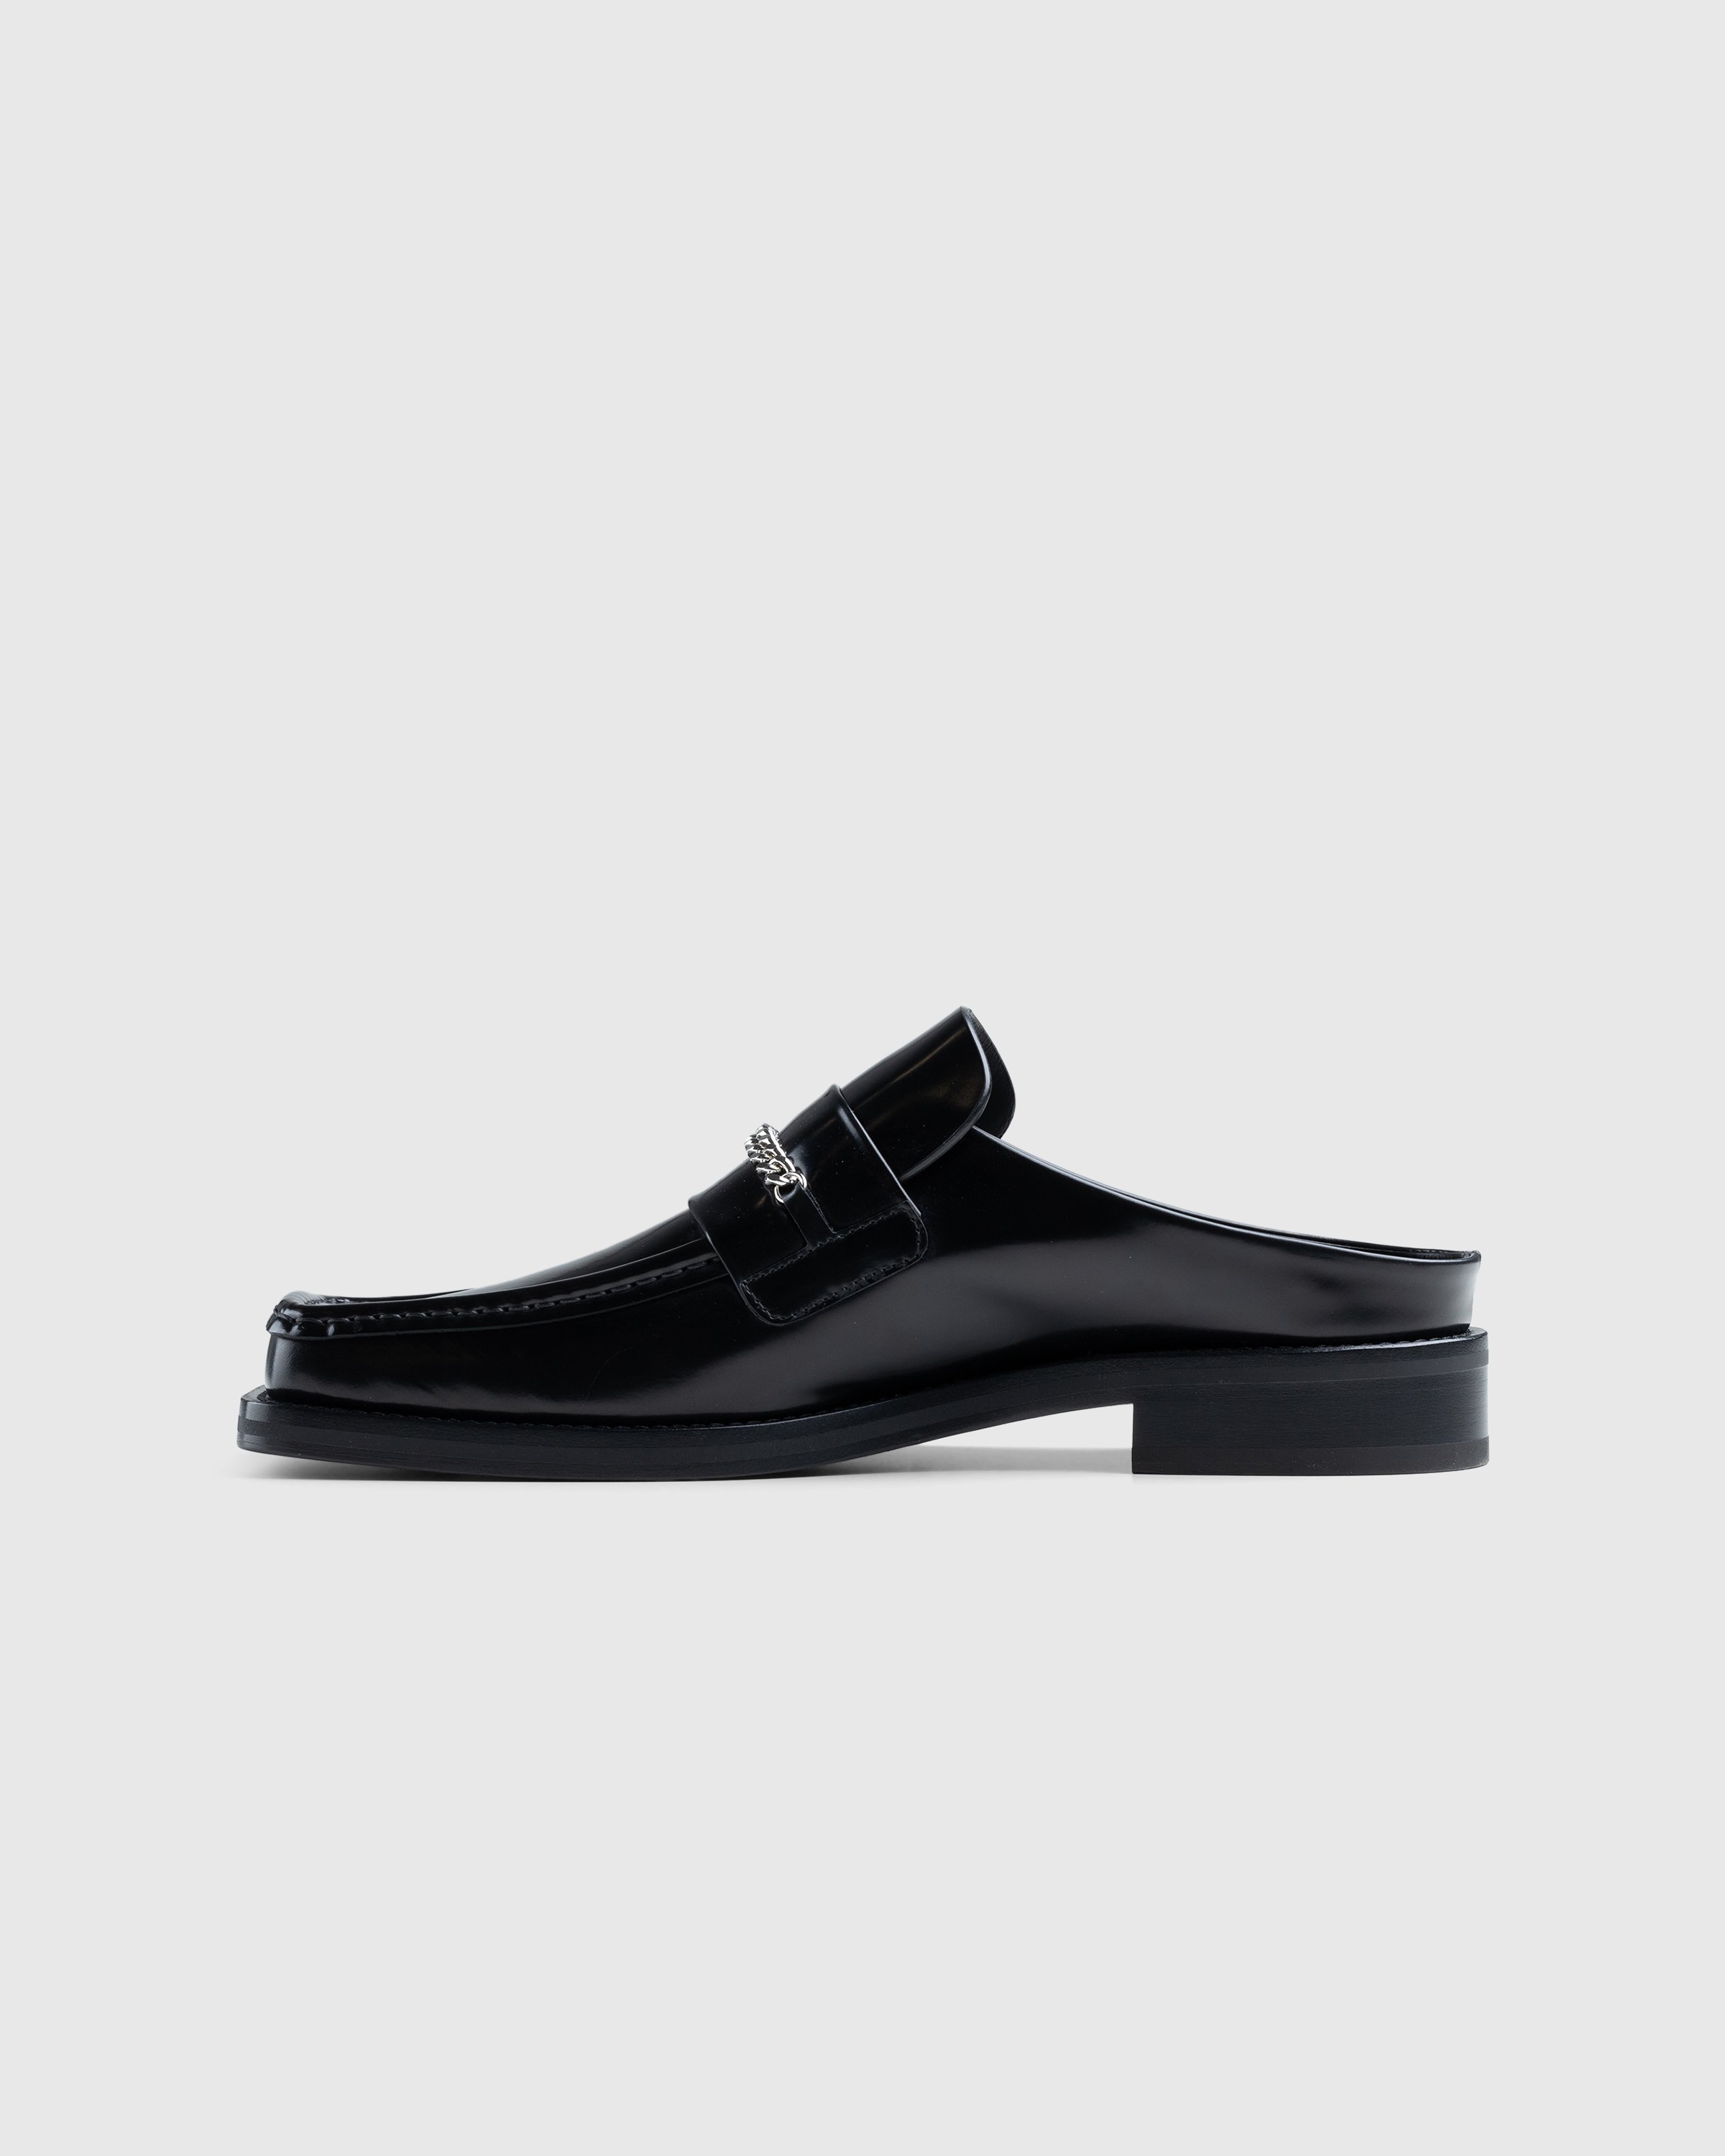 Martine Rose - Square Toe Mule Black High Shine - Footwear - Black - Image 2